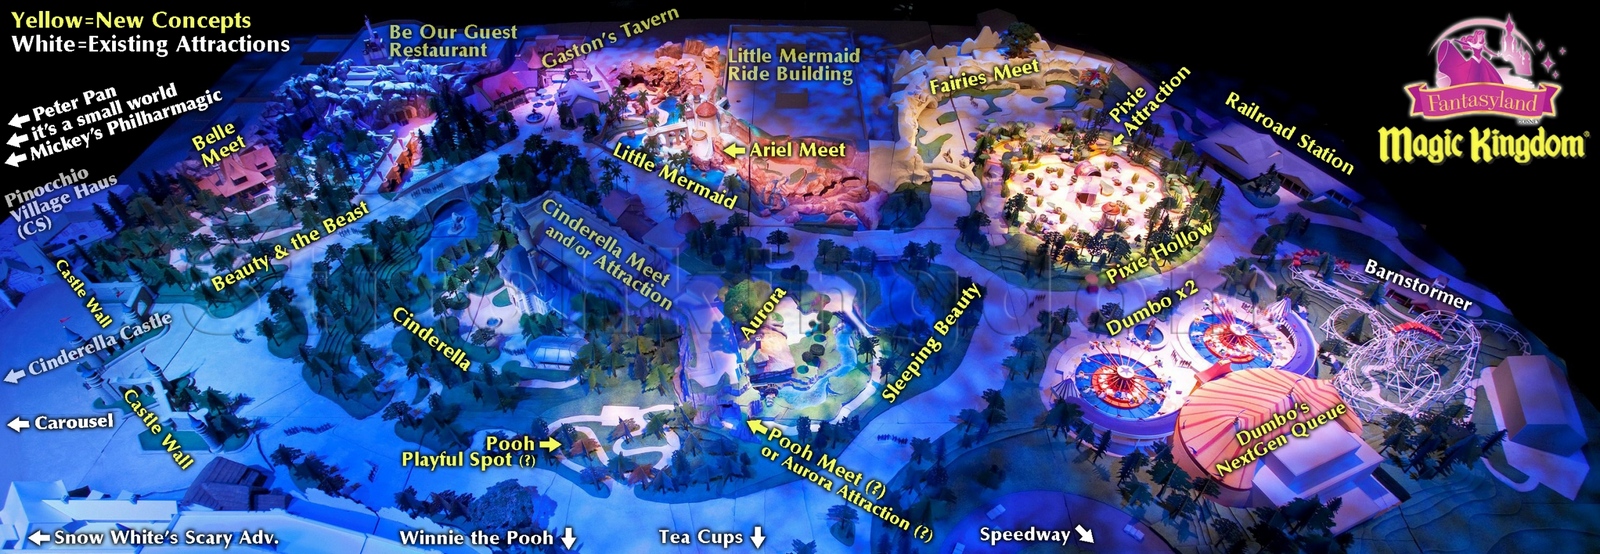 3d Map Of The New Disney S Fantasyland Plans Orlando Inside